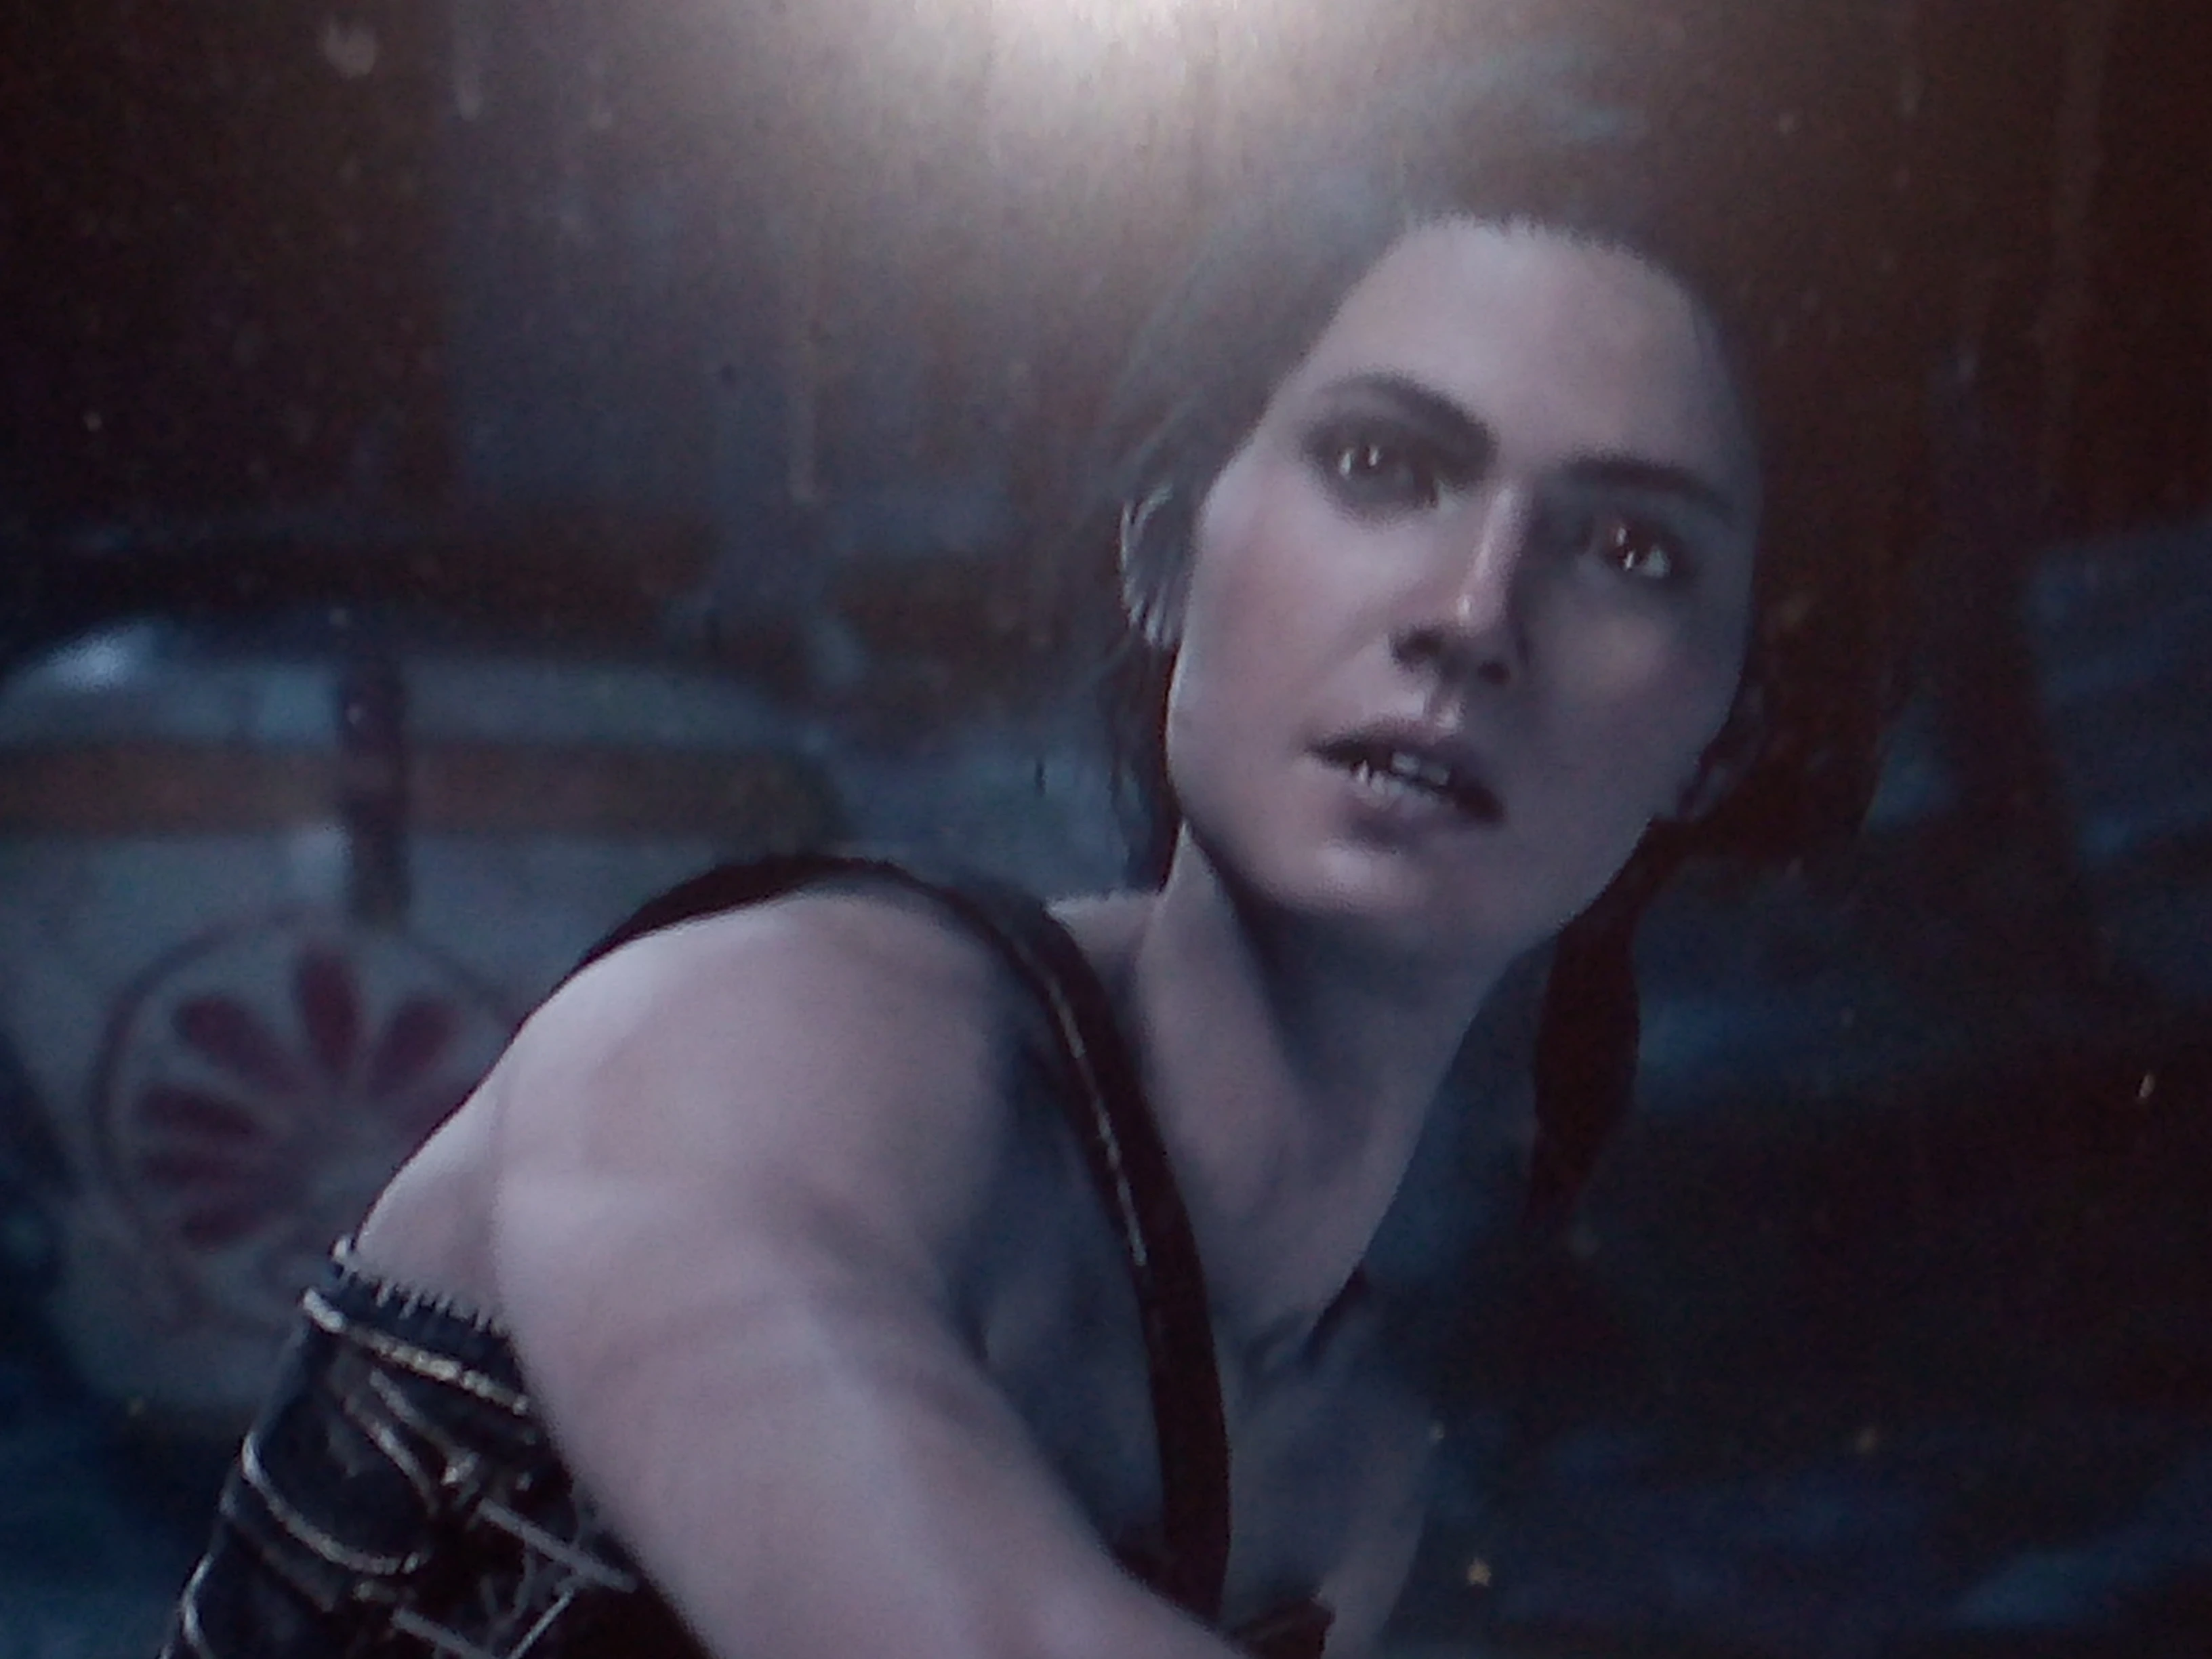 Younger Kassandra at Assassins Creed Odyssey Nexus - Mods 